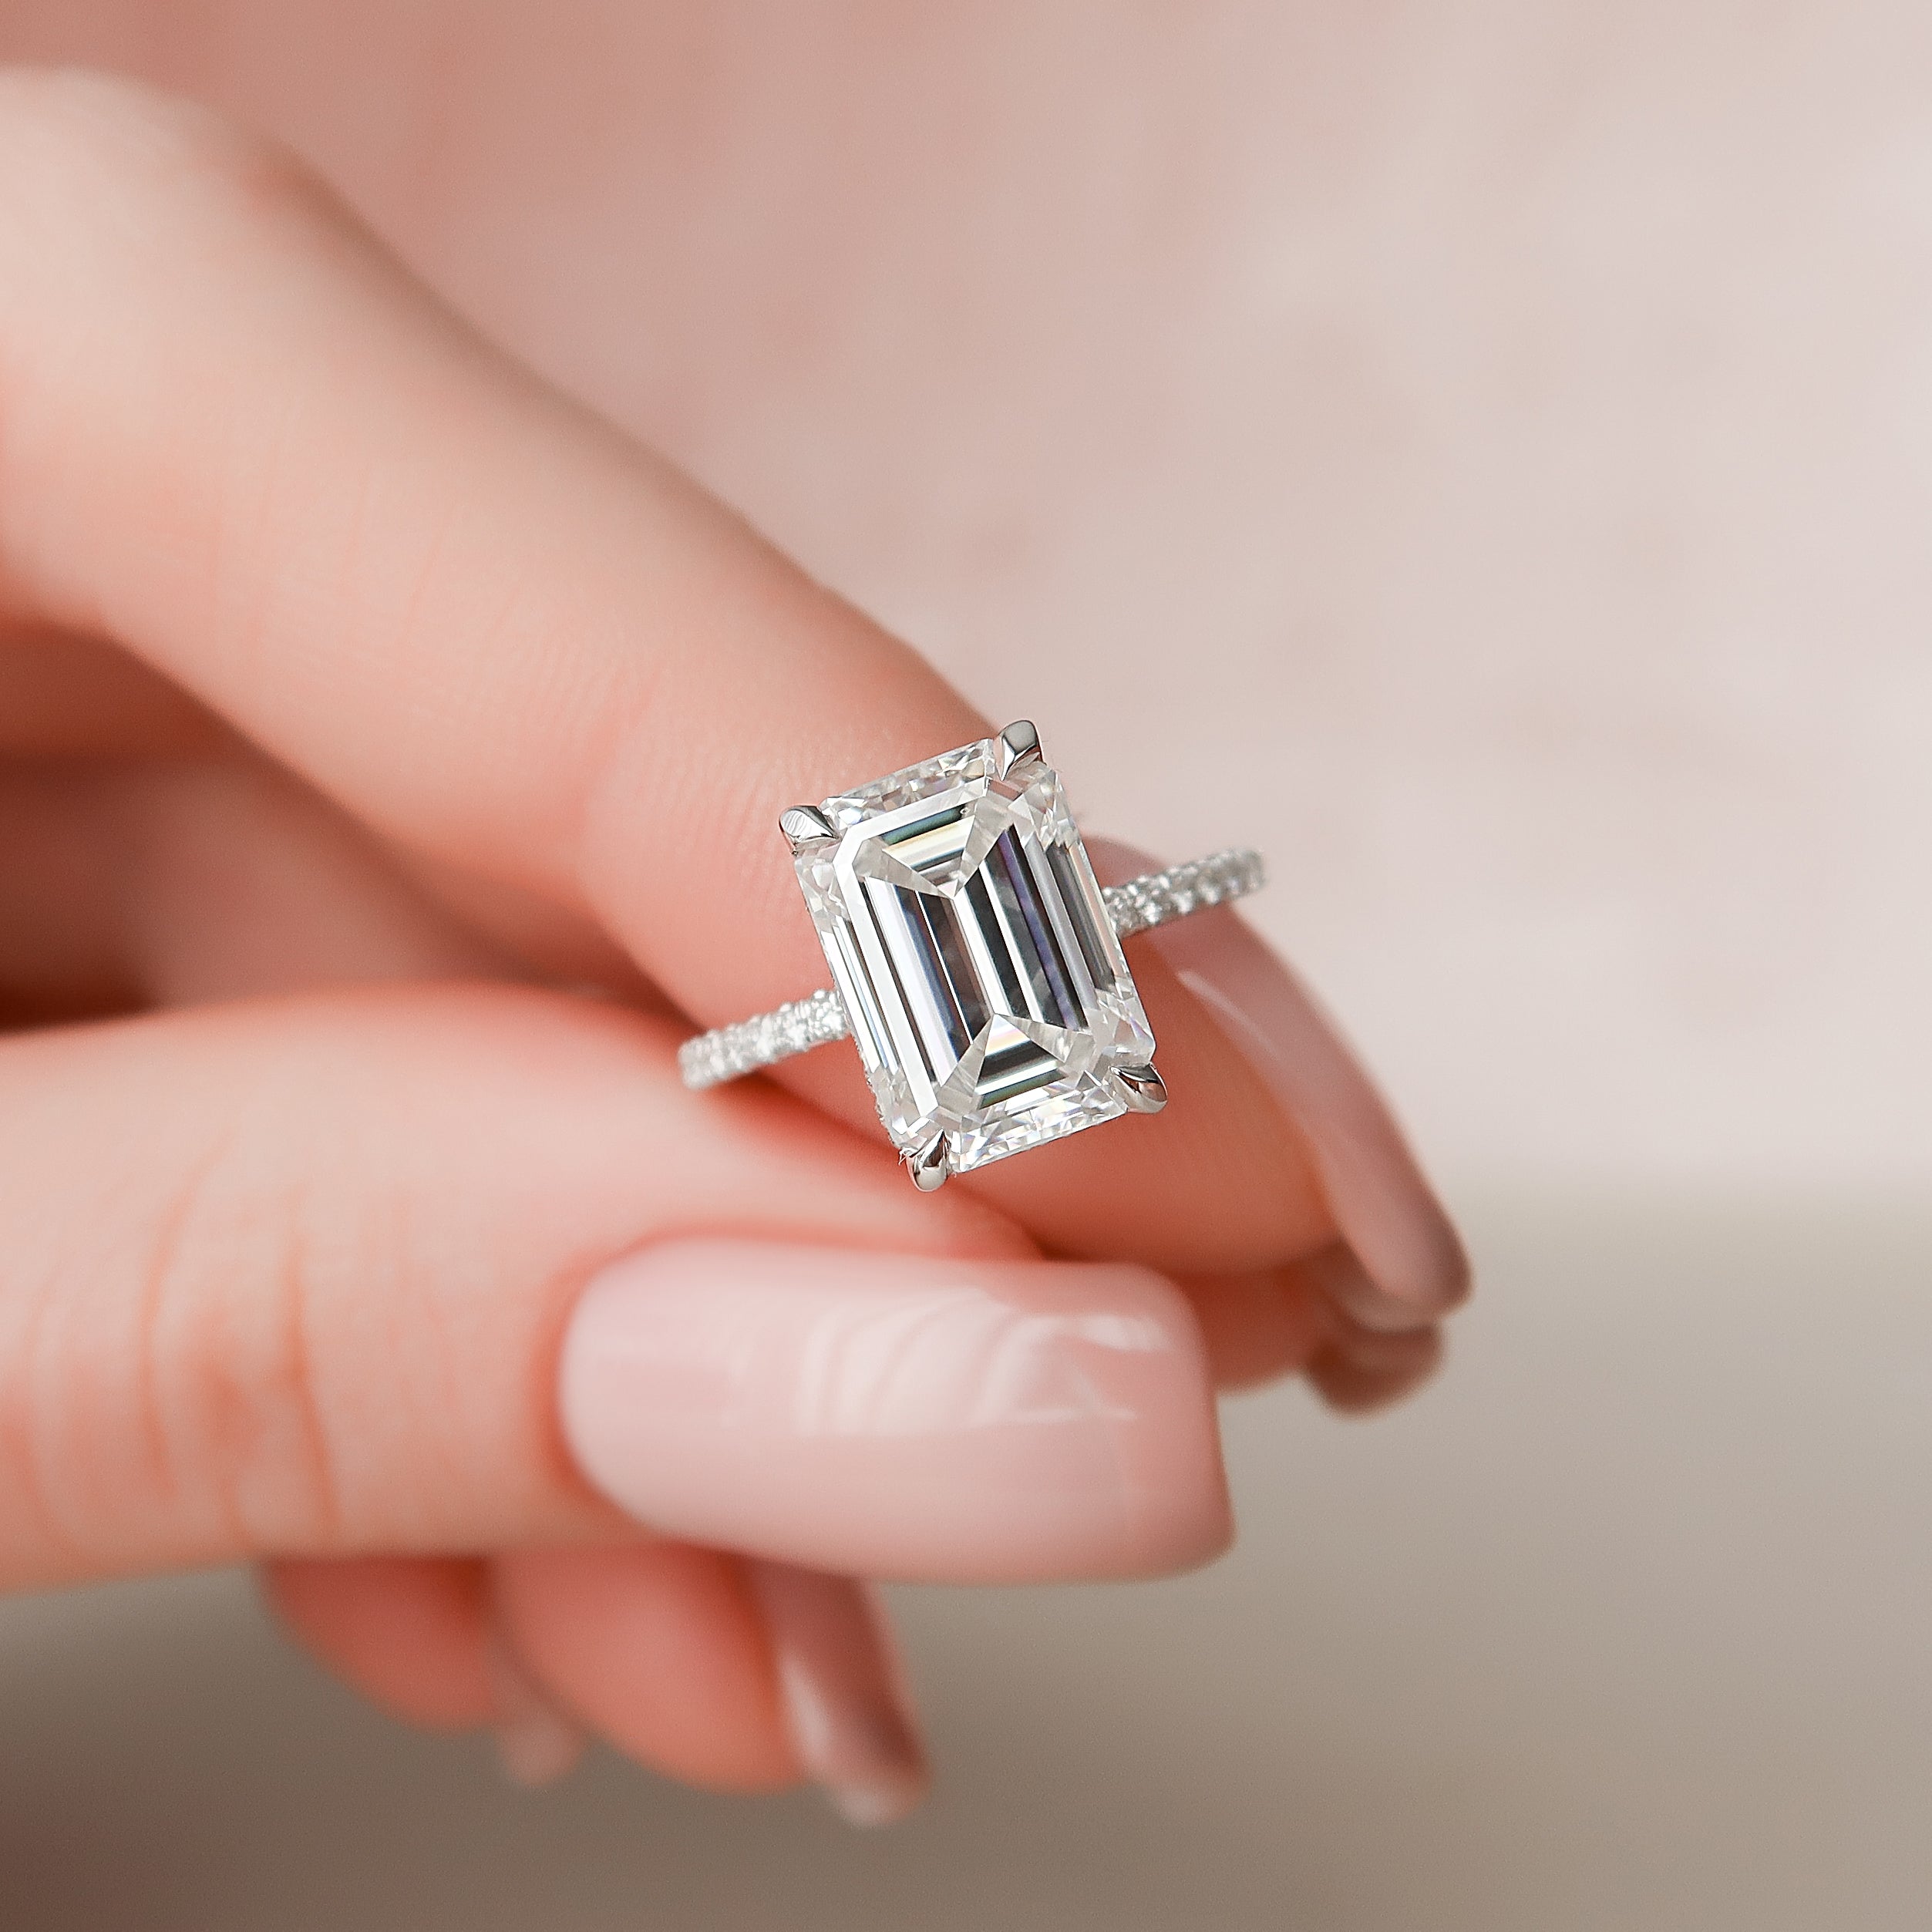 4 Carat Emerald Cut Diamond Engagement Ring 4.33ct N/VVS1 GIA